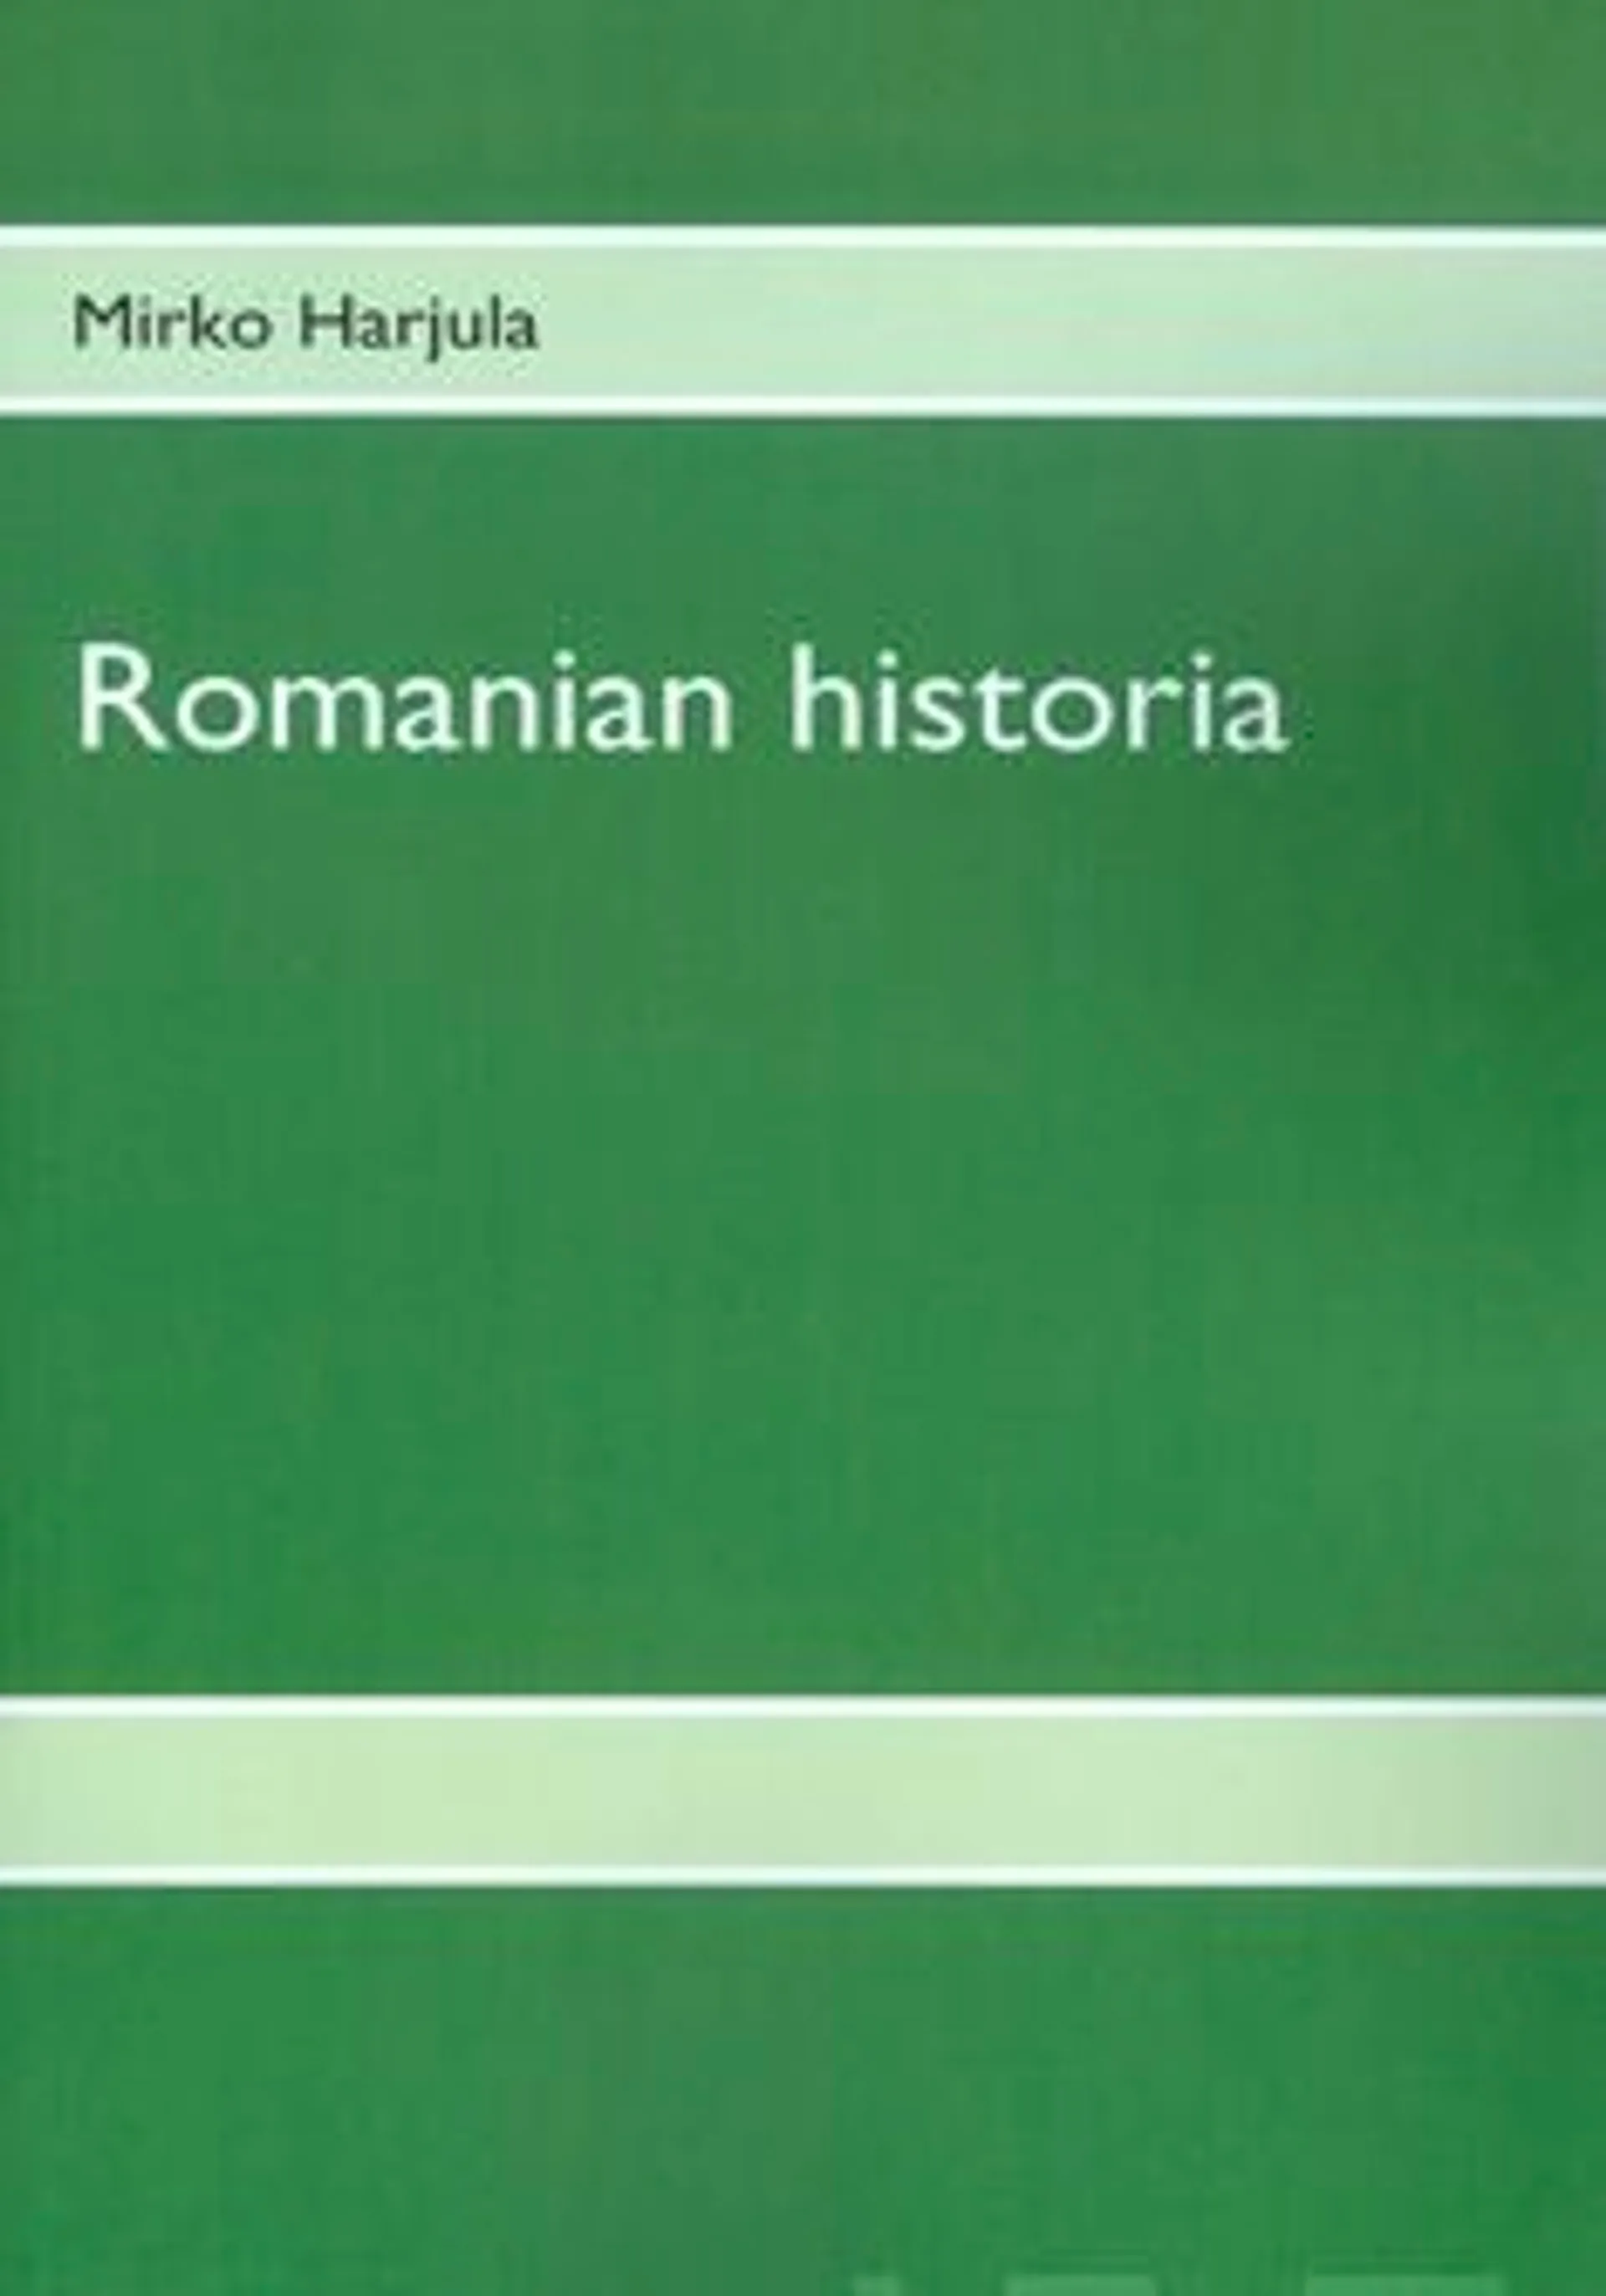 Harjula, Romanian historia